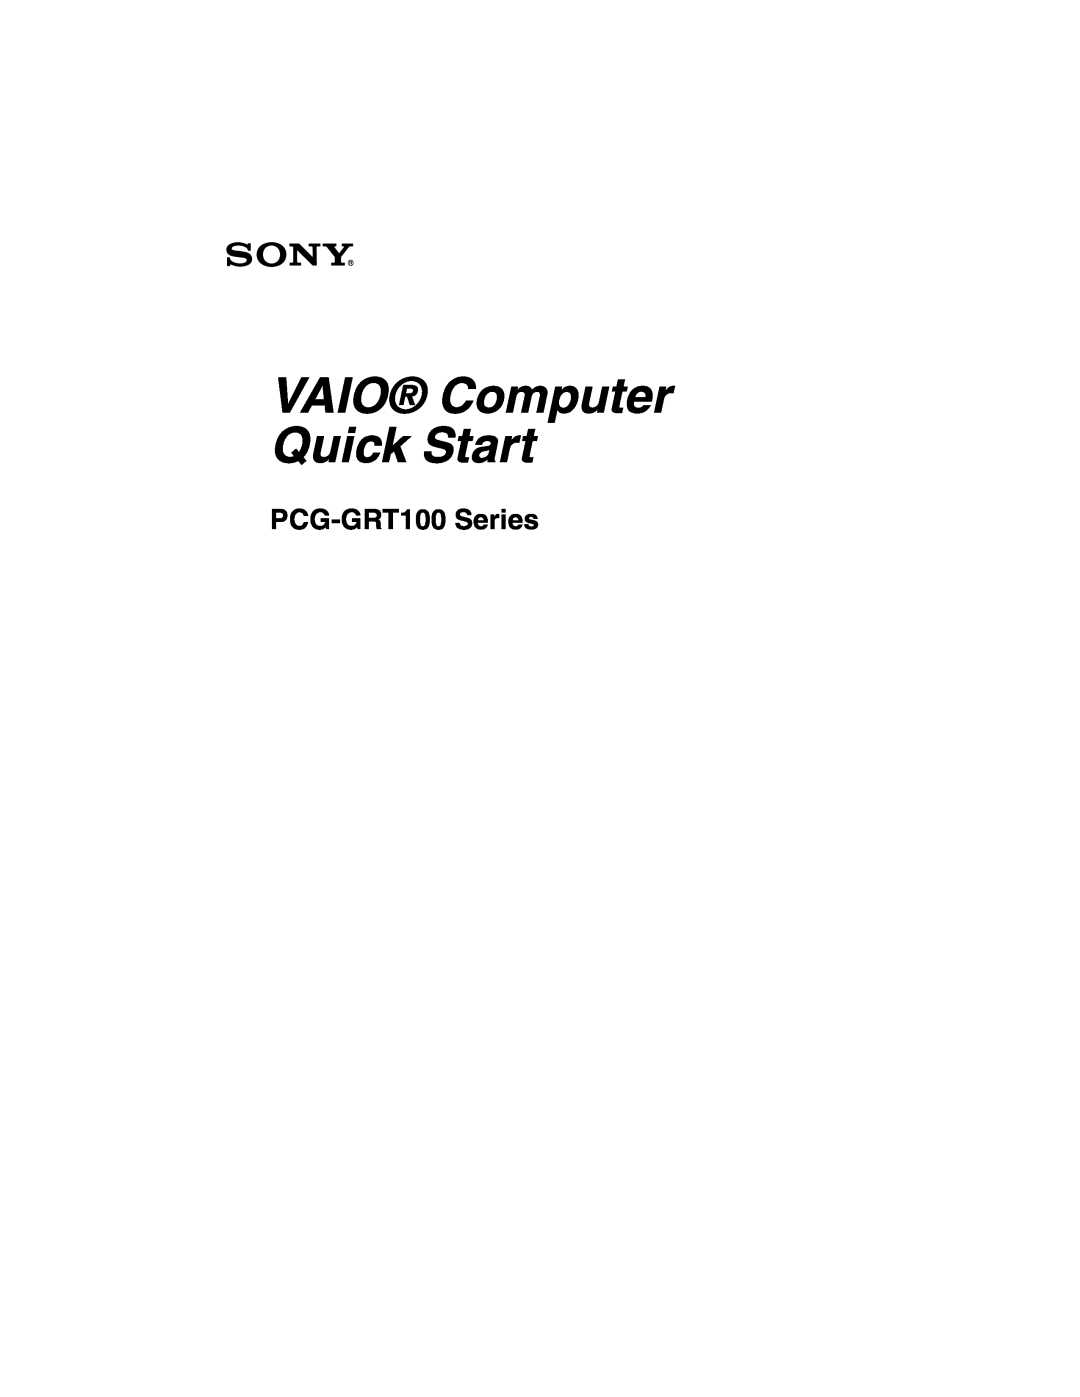 Sony quick start VAIO Computer Quick Start, PCG-GRT100 Series 